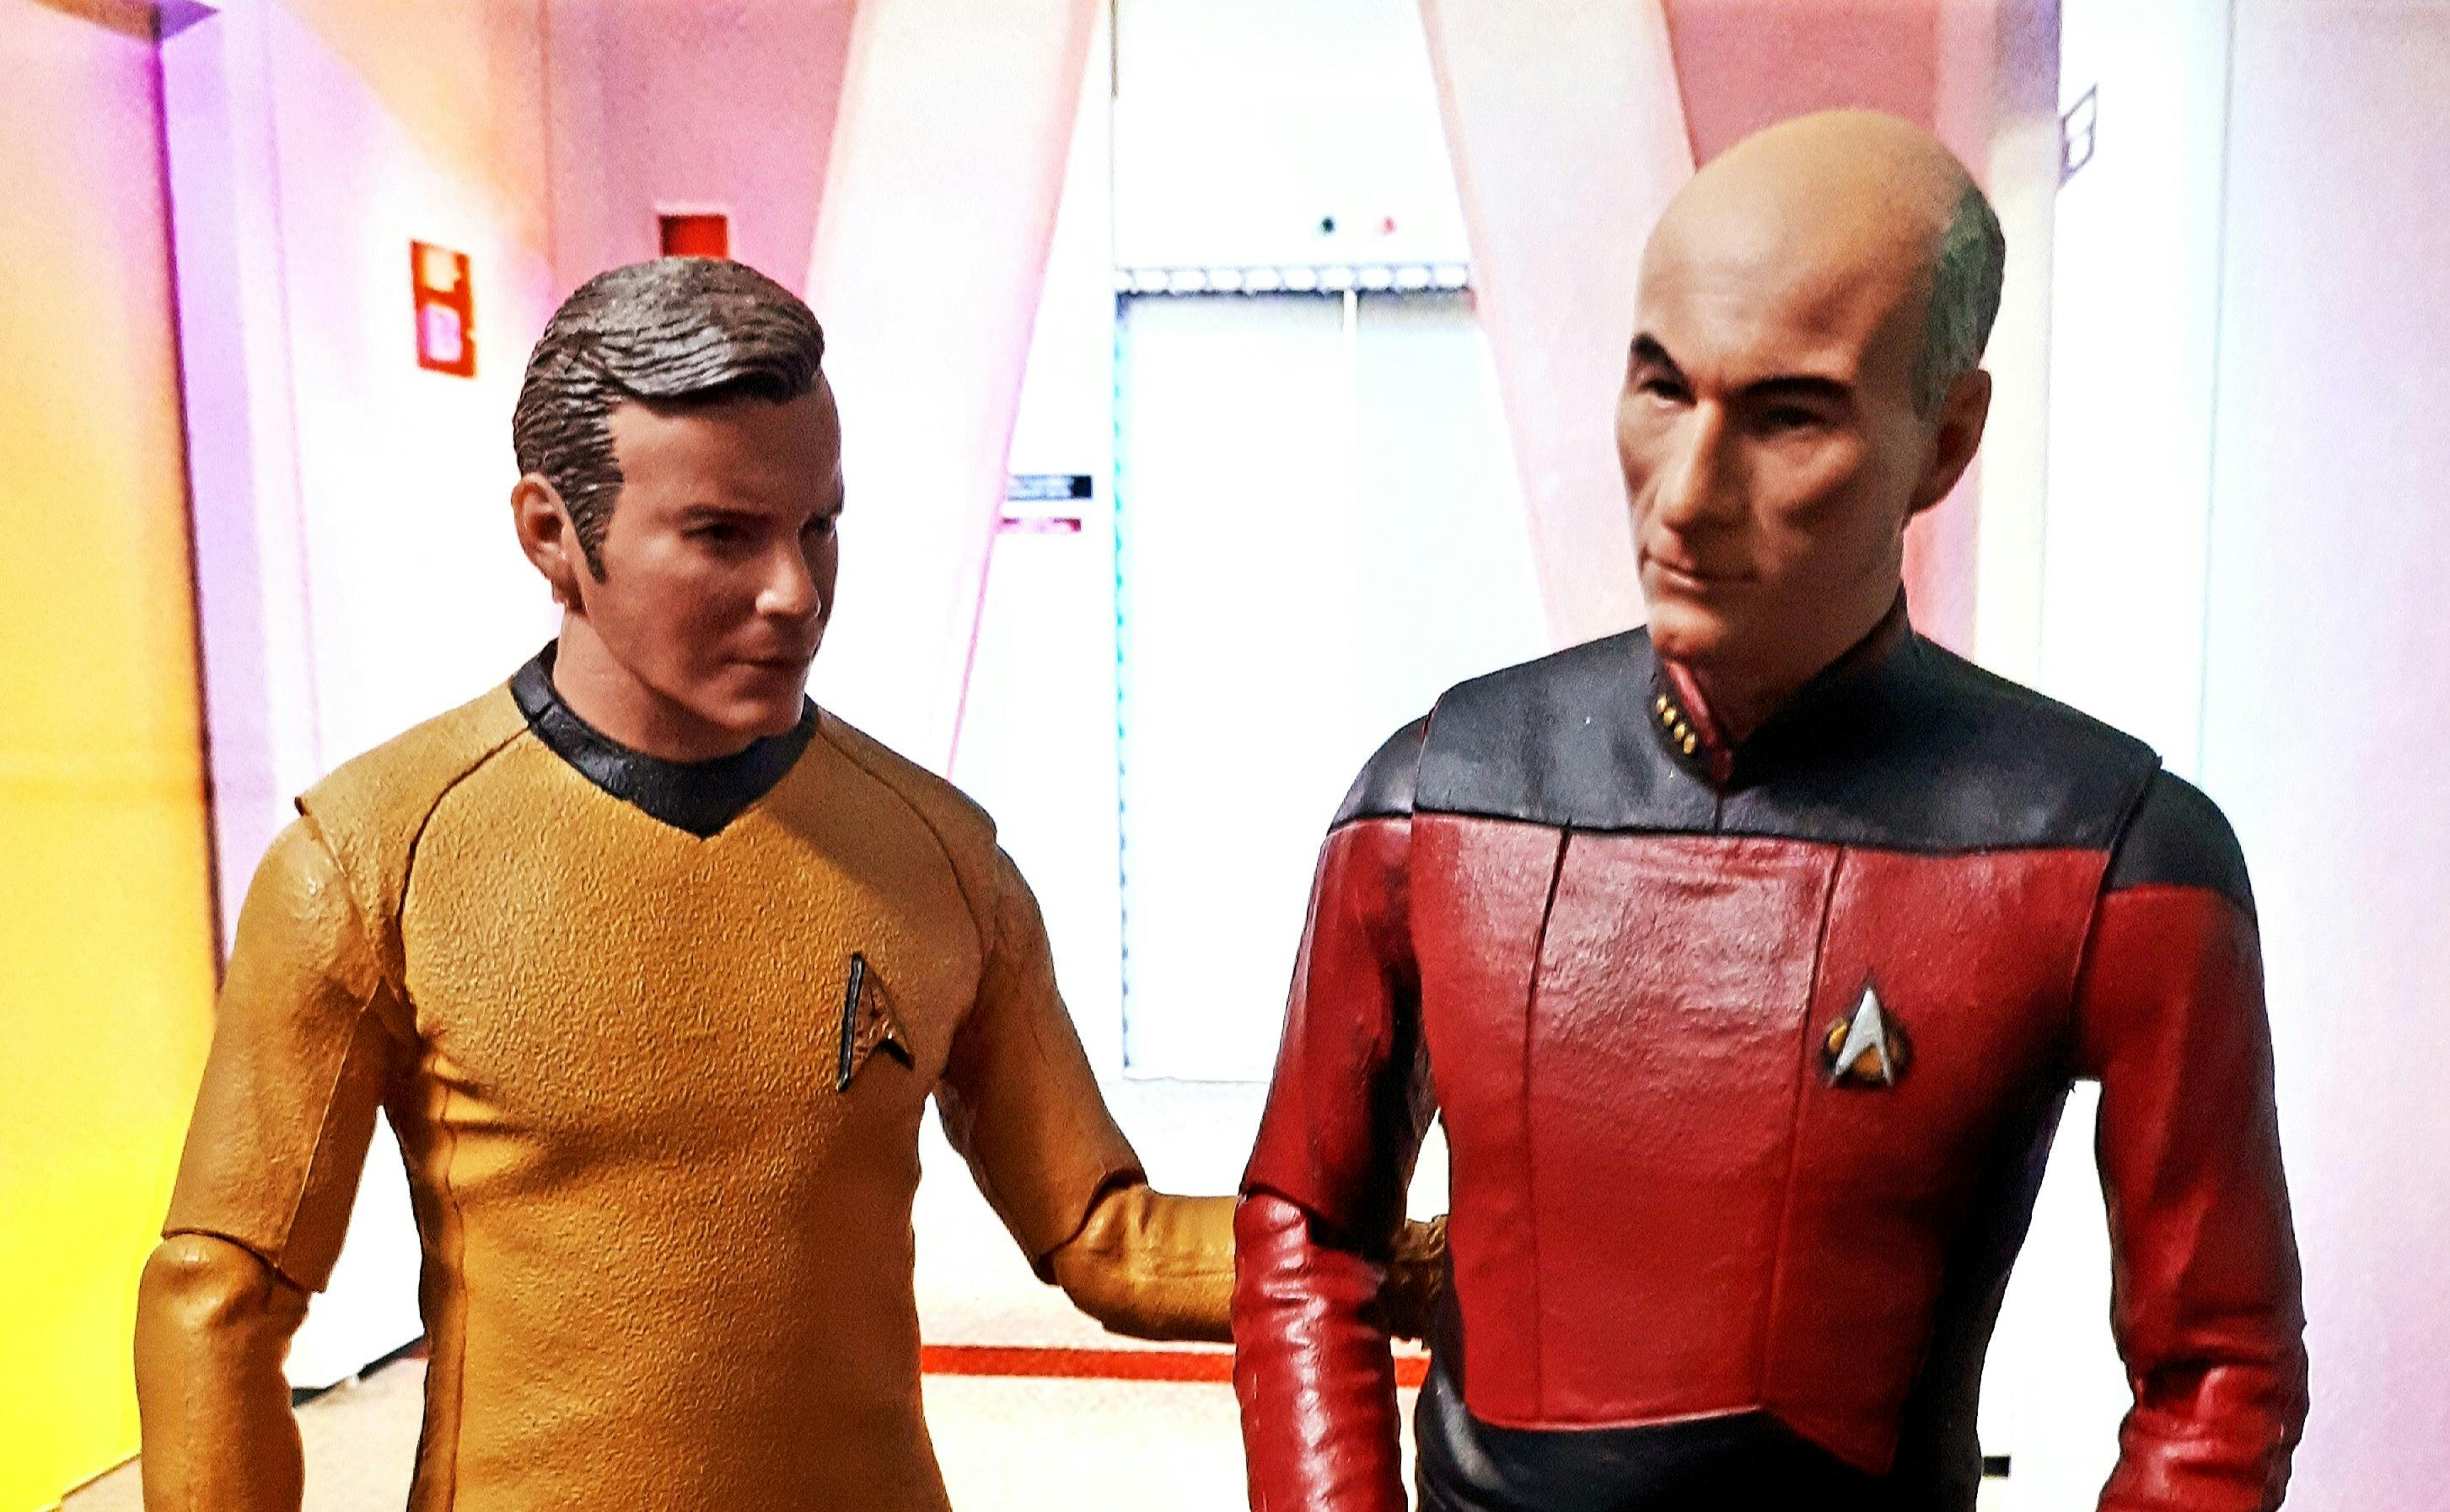 Star Trek: The Original Series - Star Trek: The Next Generation